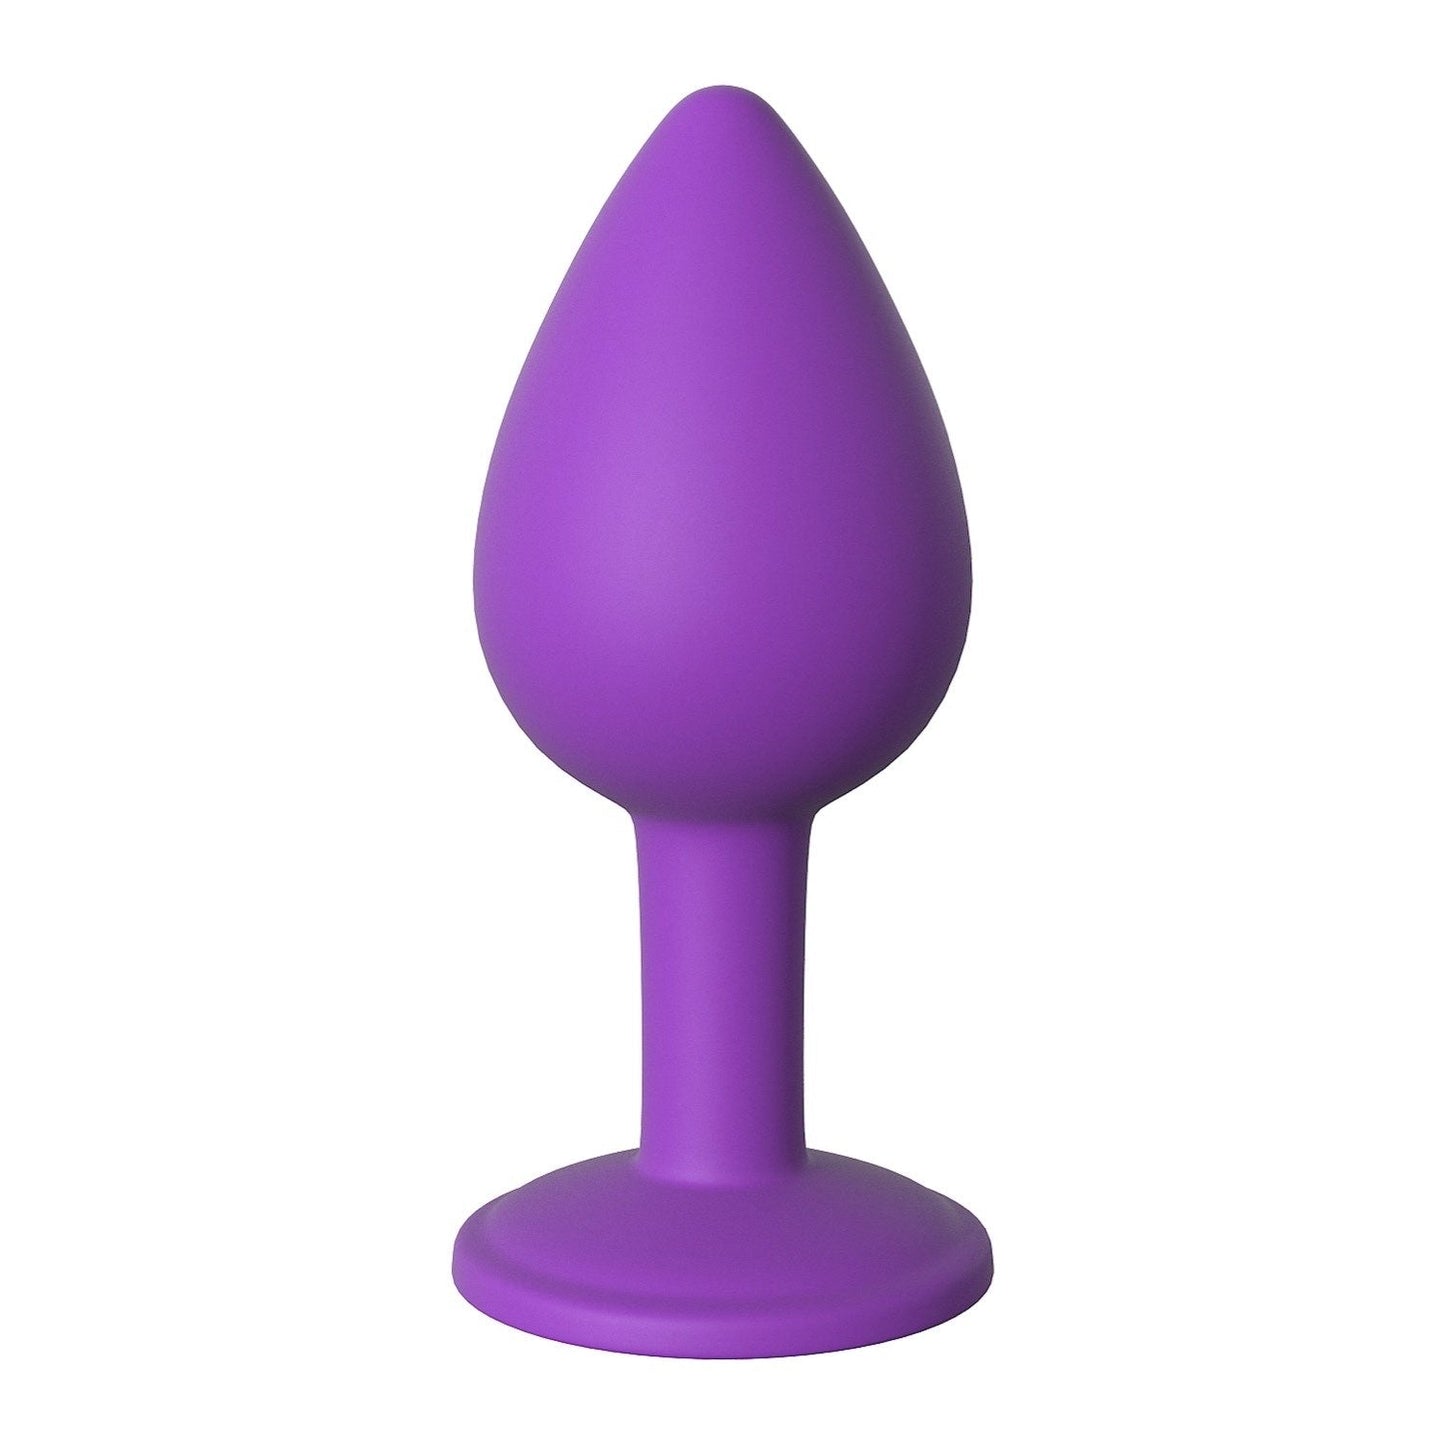 Little Gem Small Plug - Purple 7.2 cm Butt Plug with Jewel Base